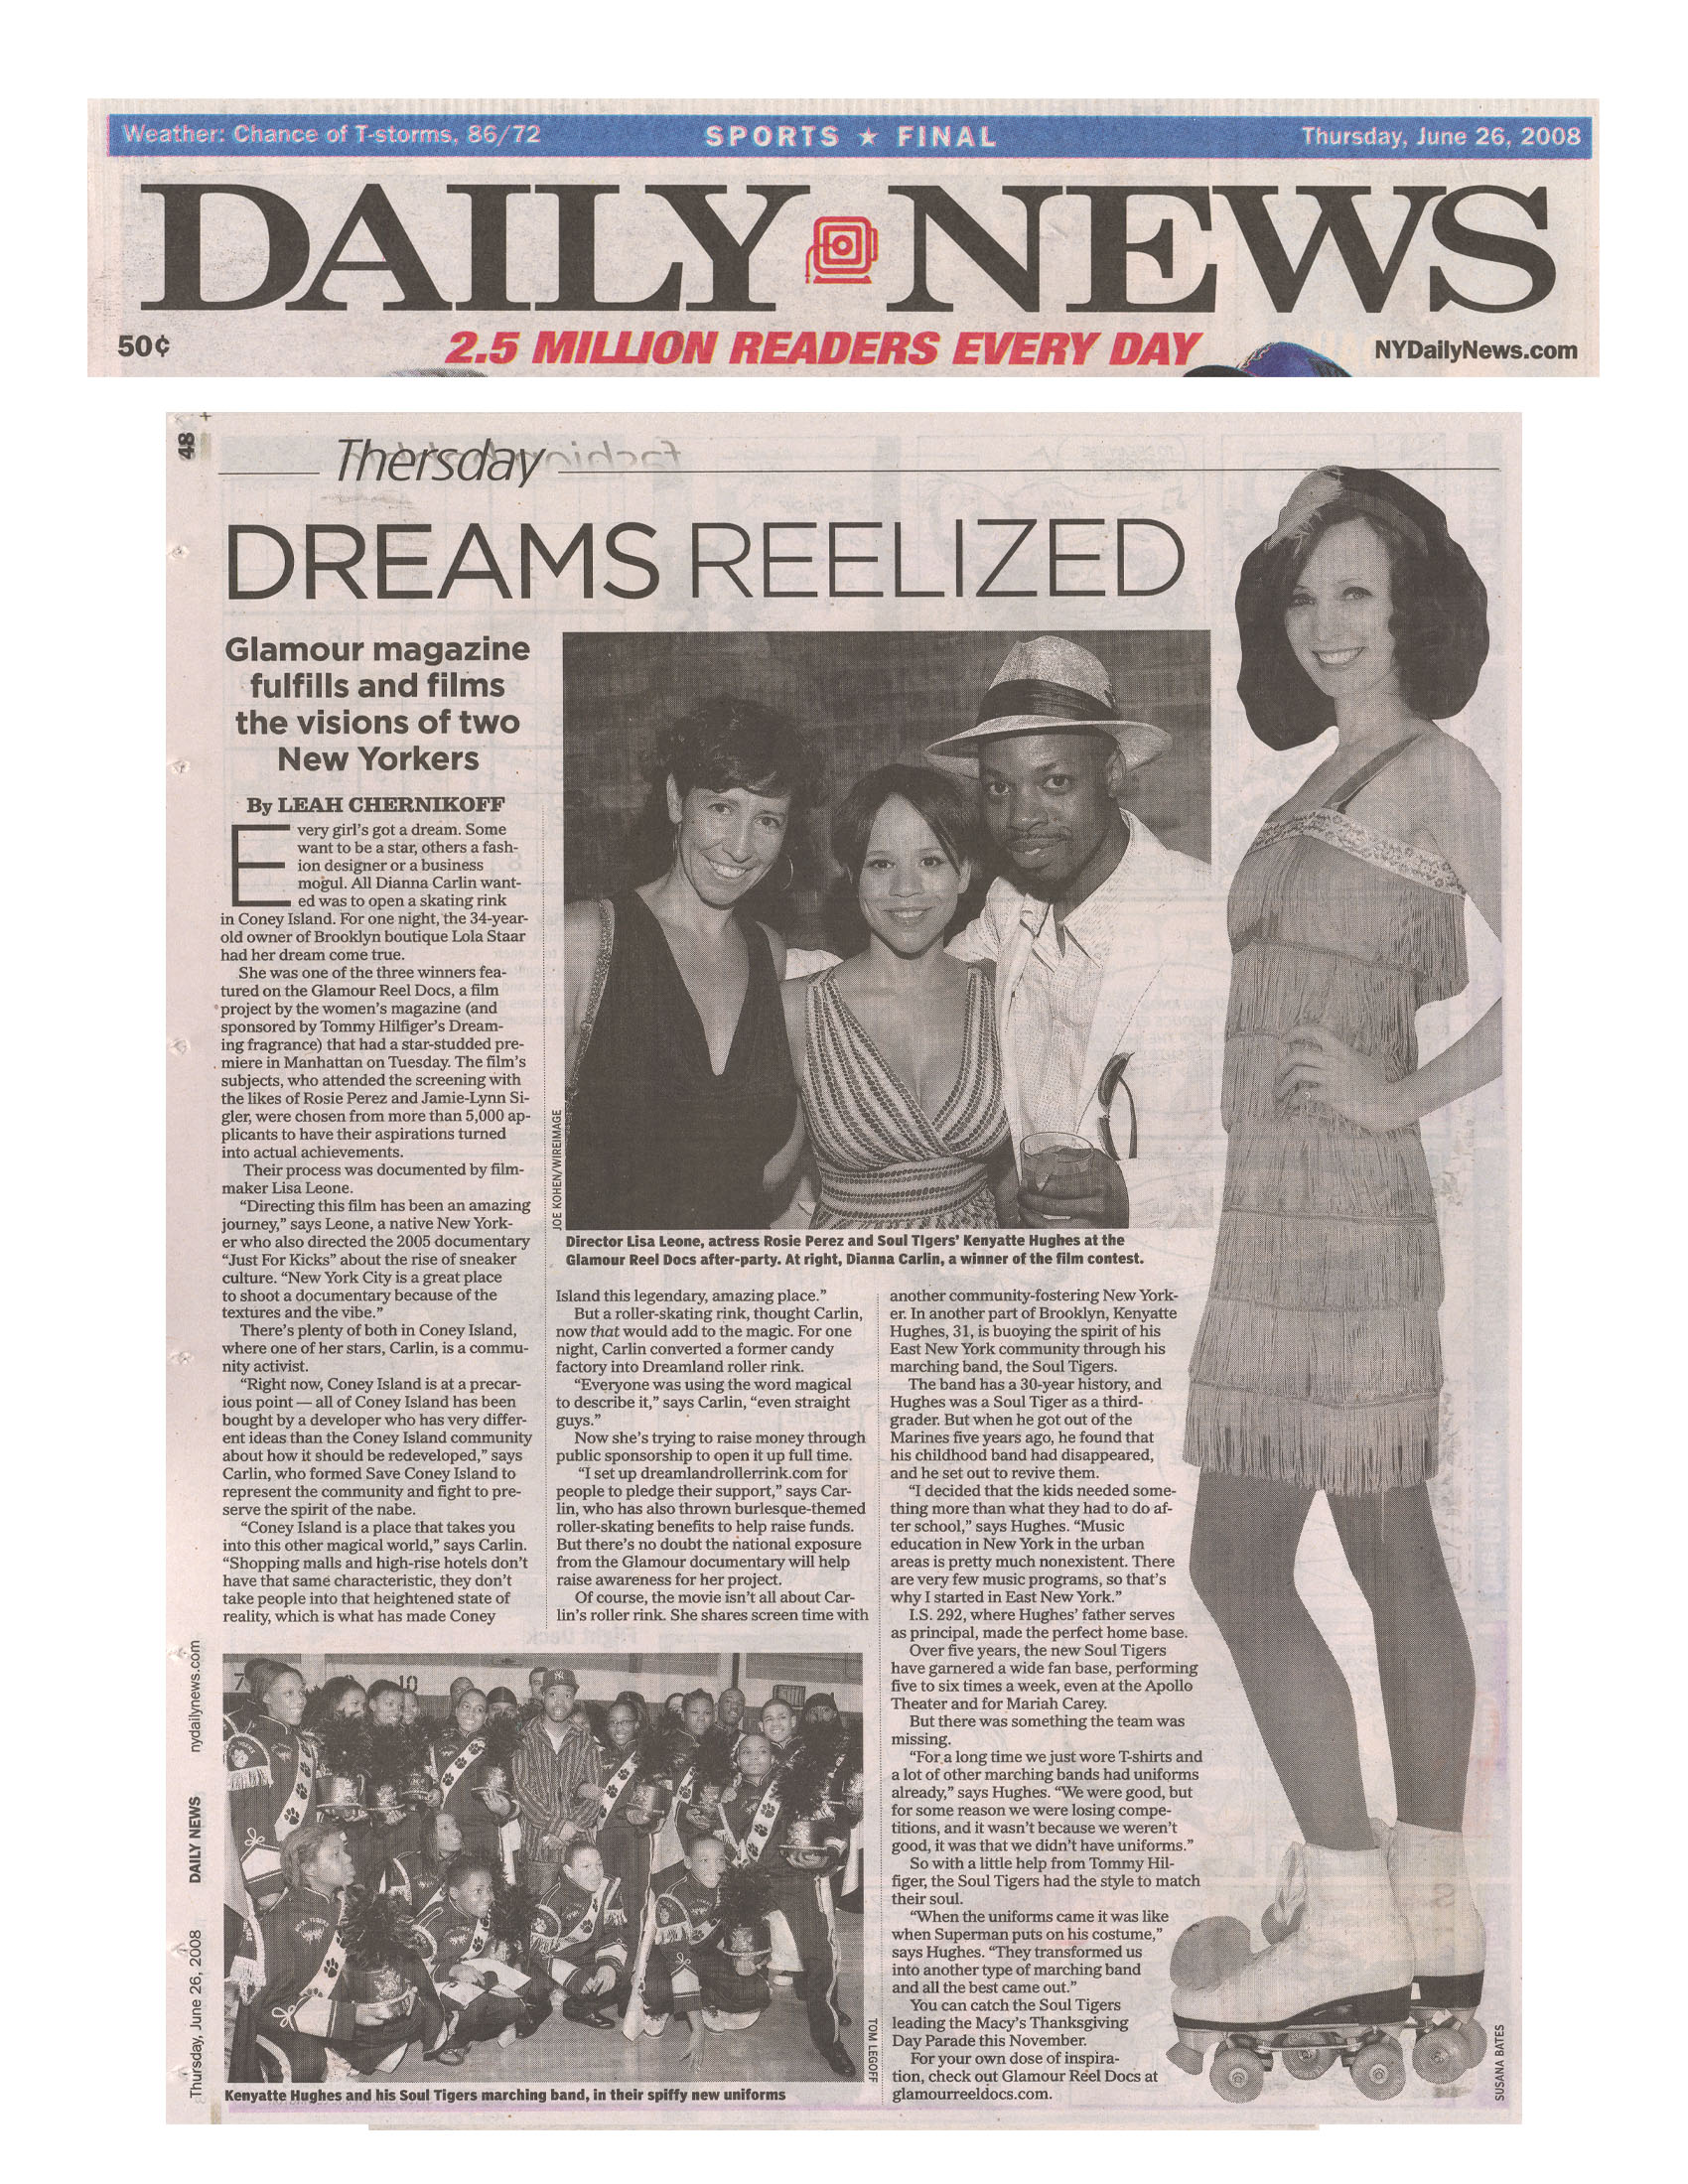 DailyNews-DreamReelized[7]